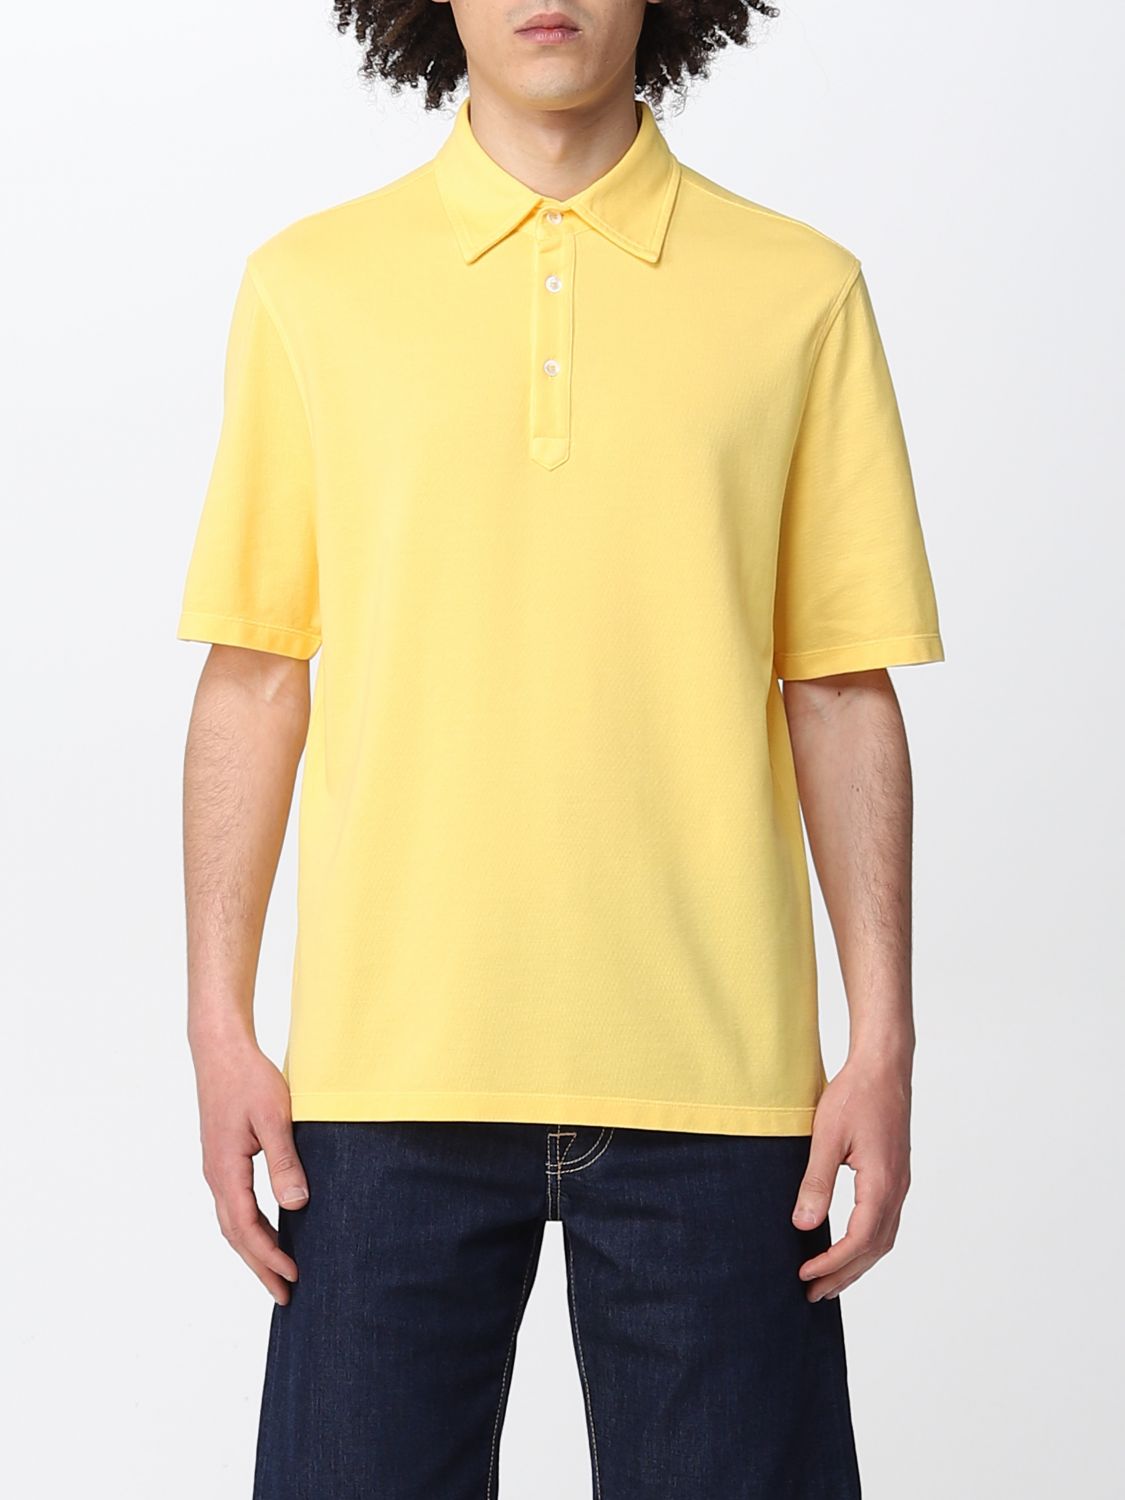 Polo shirt Malo: Malo polo shirt for man yellow 1